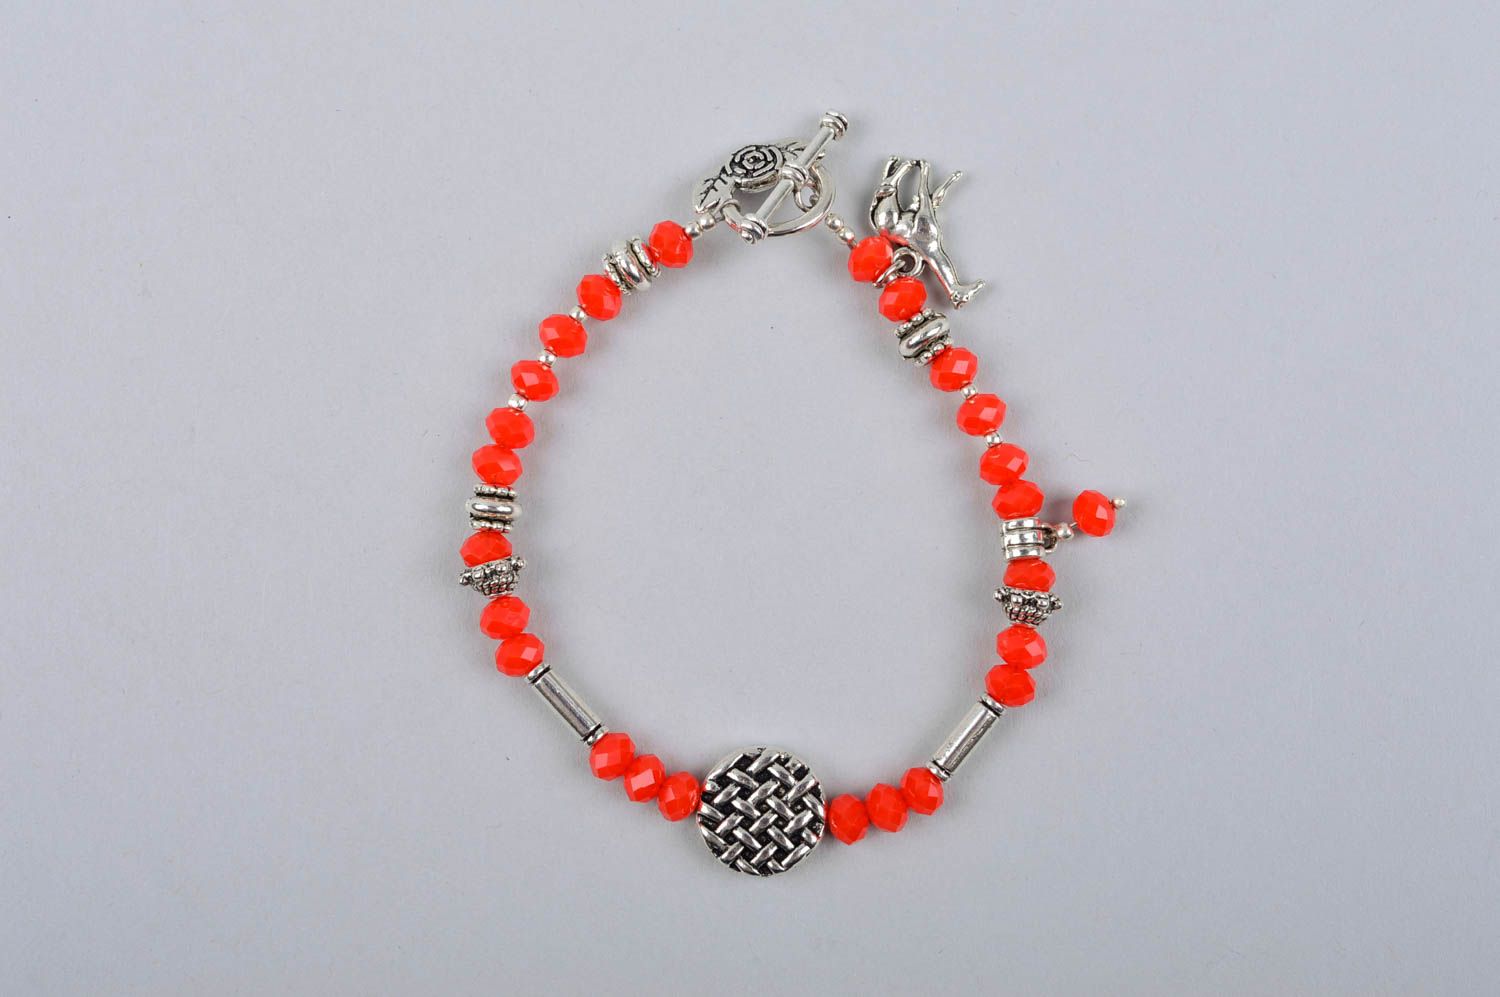 Handmade red beads bracelet with metal giraffe charm photo 2